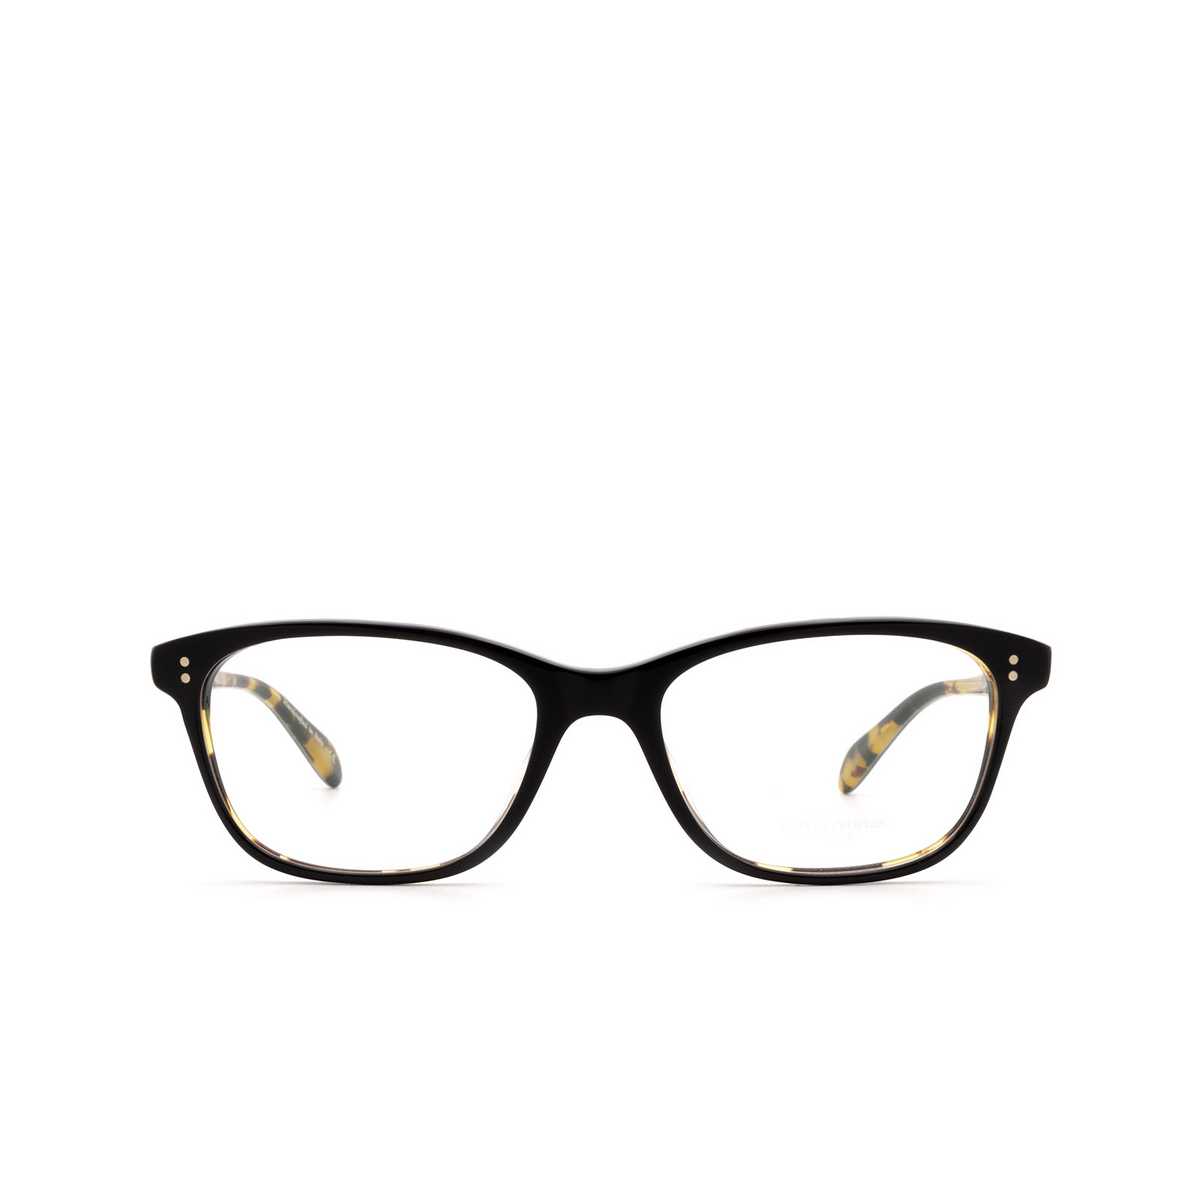 Oliver Peoples® Square Eyeglasses: Ashton OV5224 color Black / Dark Tortoise Black 1309 - 1/3.